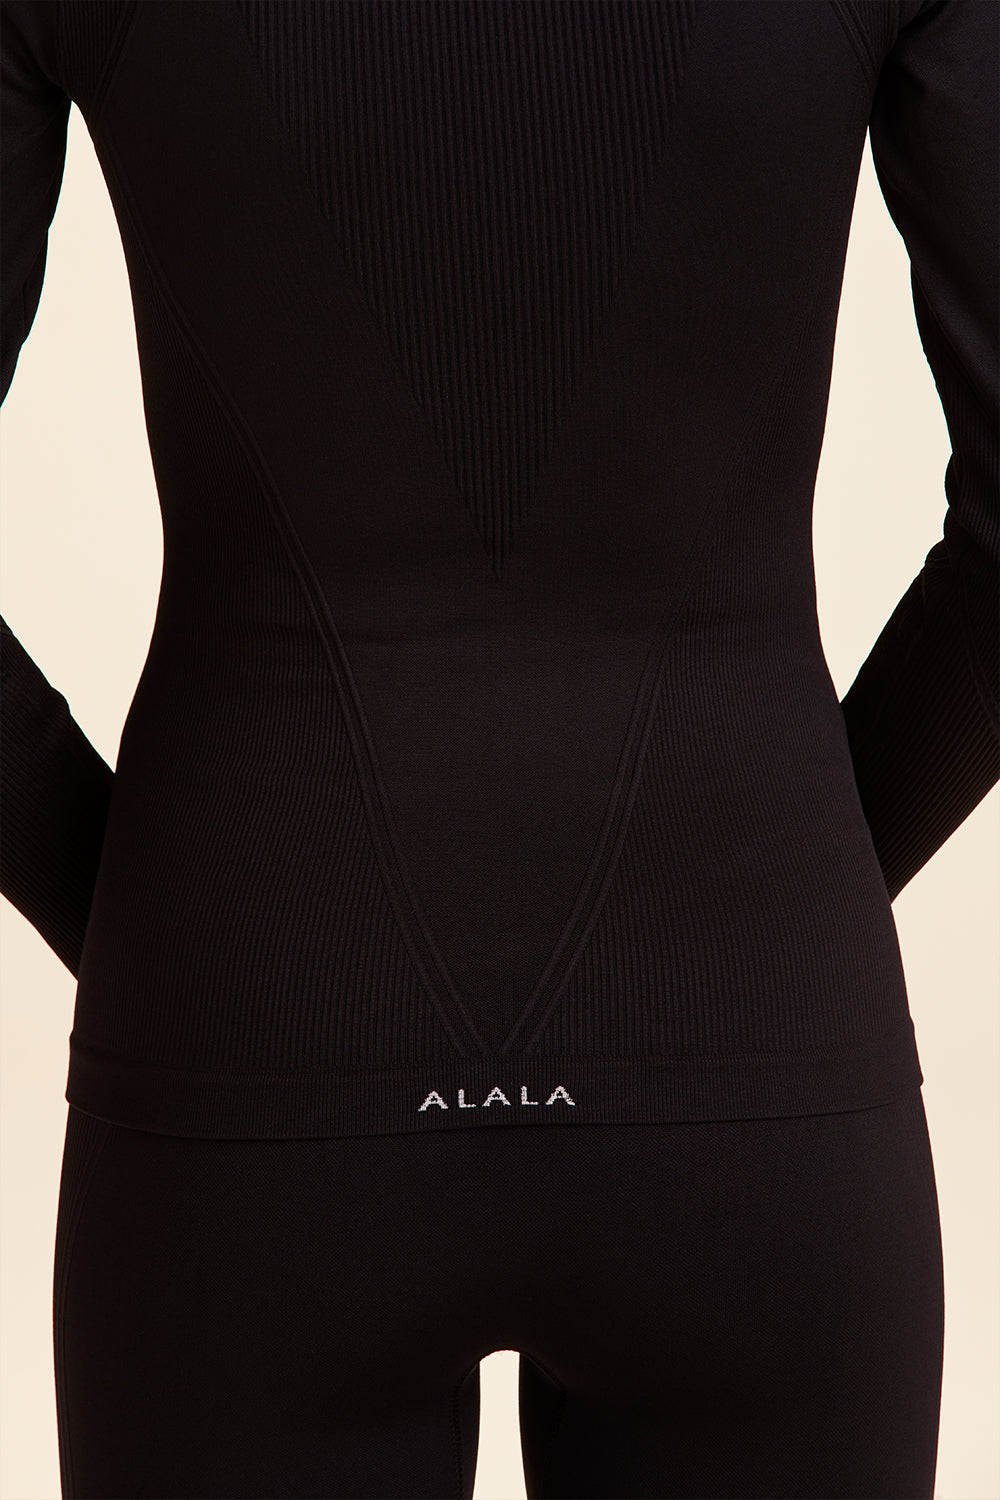 Alala Barre Seamless Long Sleeve in Black for women